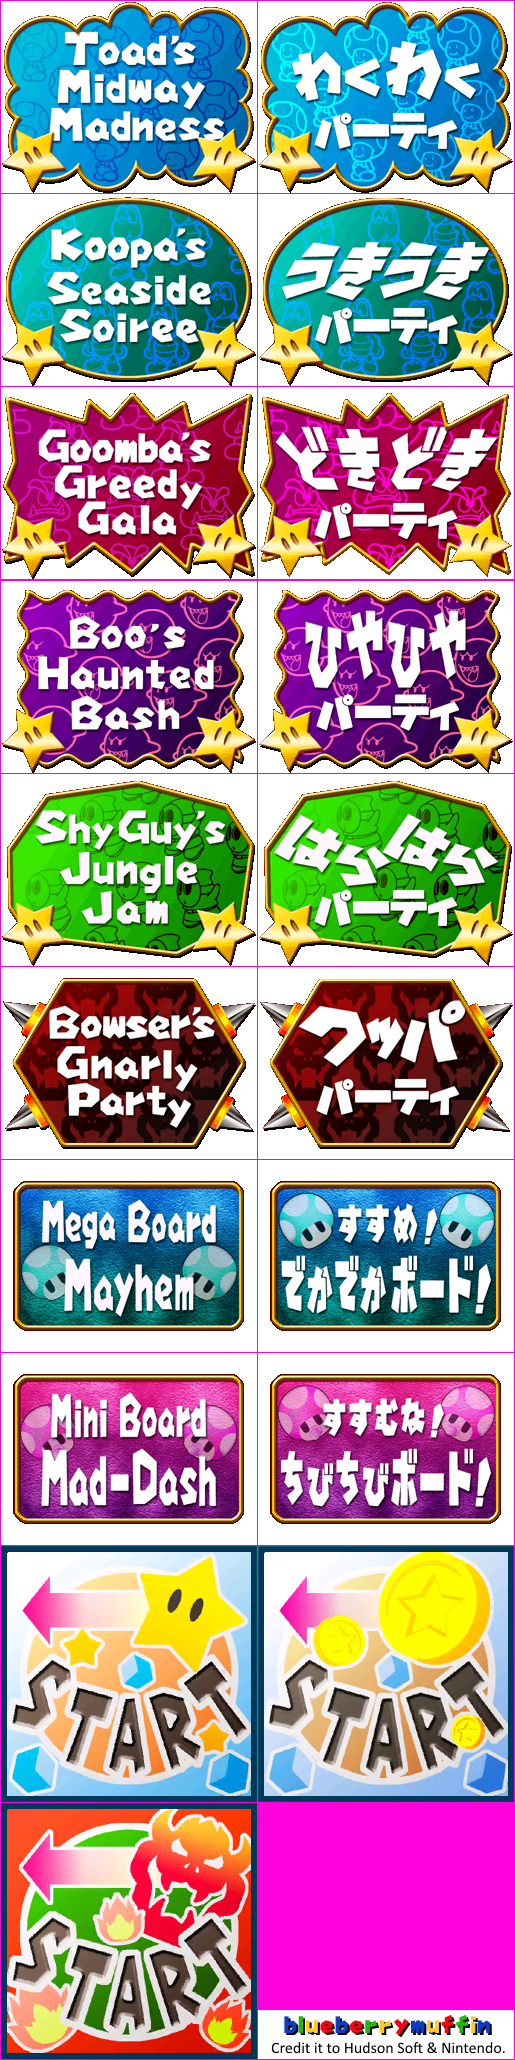 Mario Party 4 - Board Logo & Starting Areas